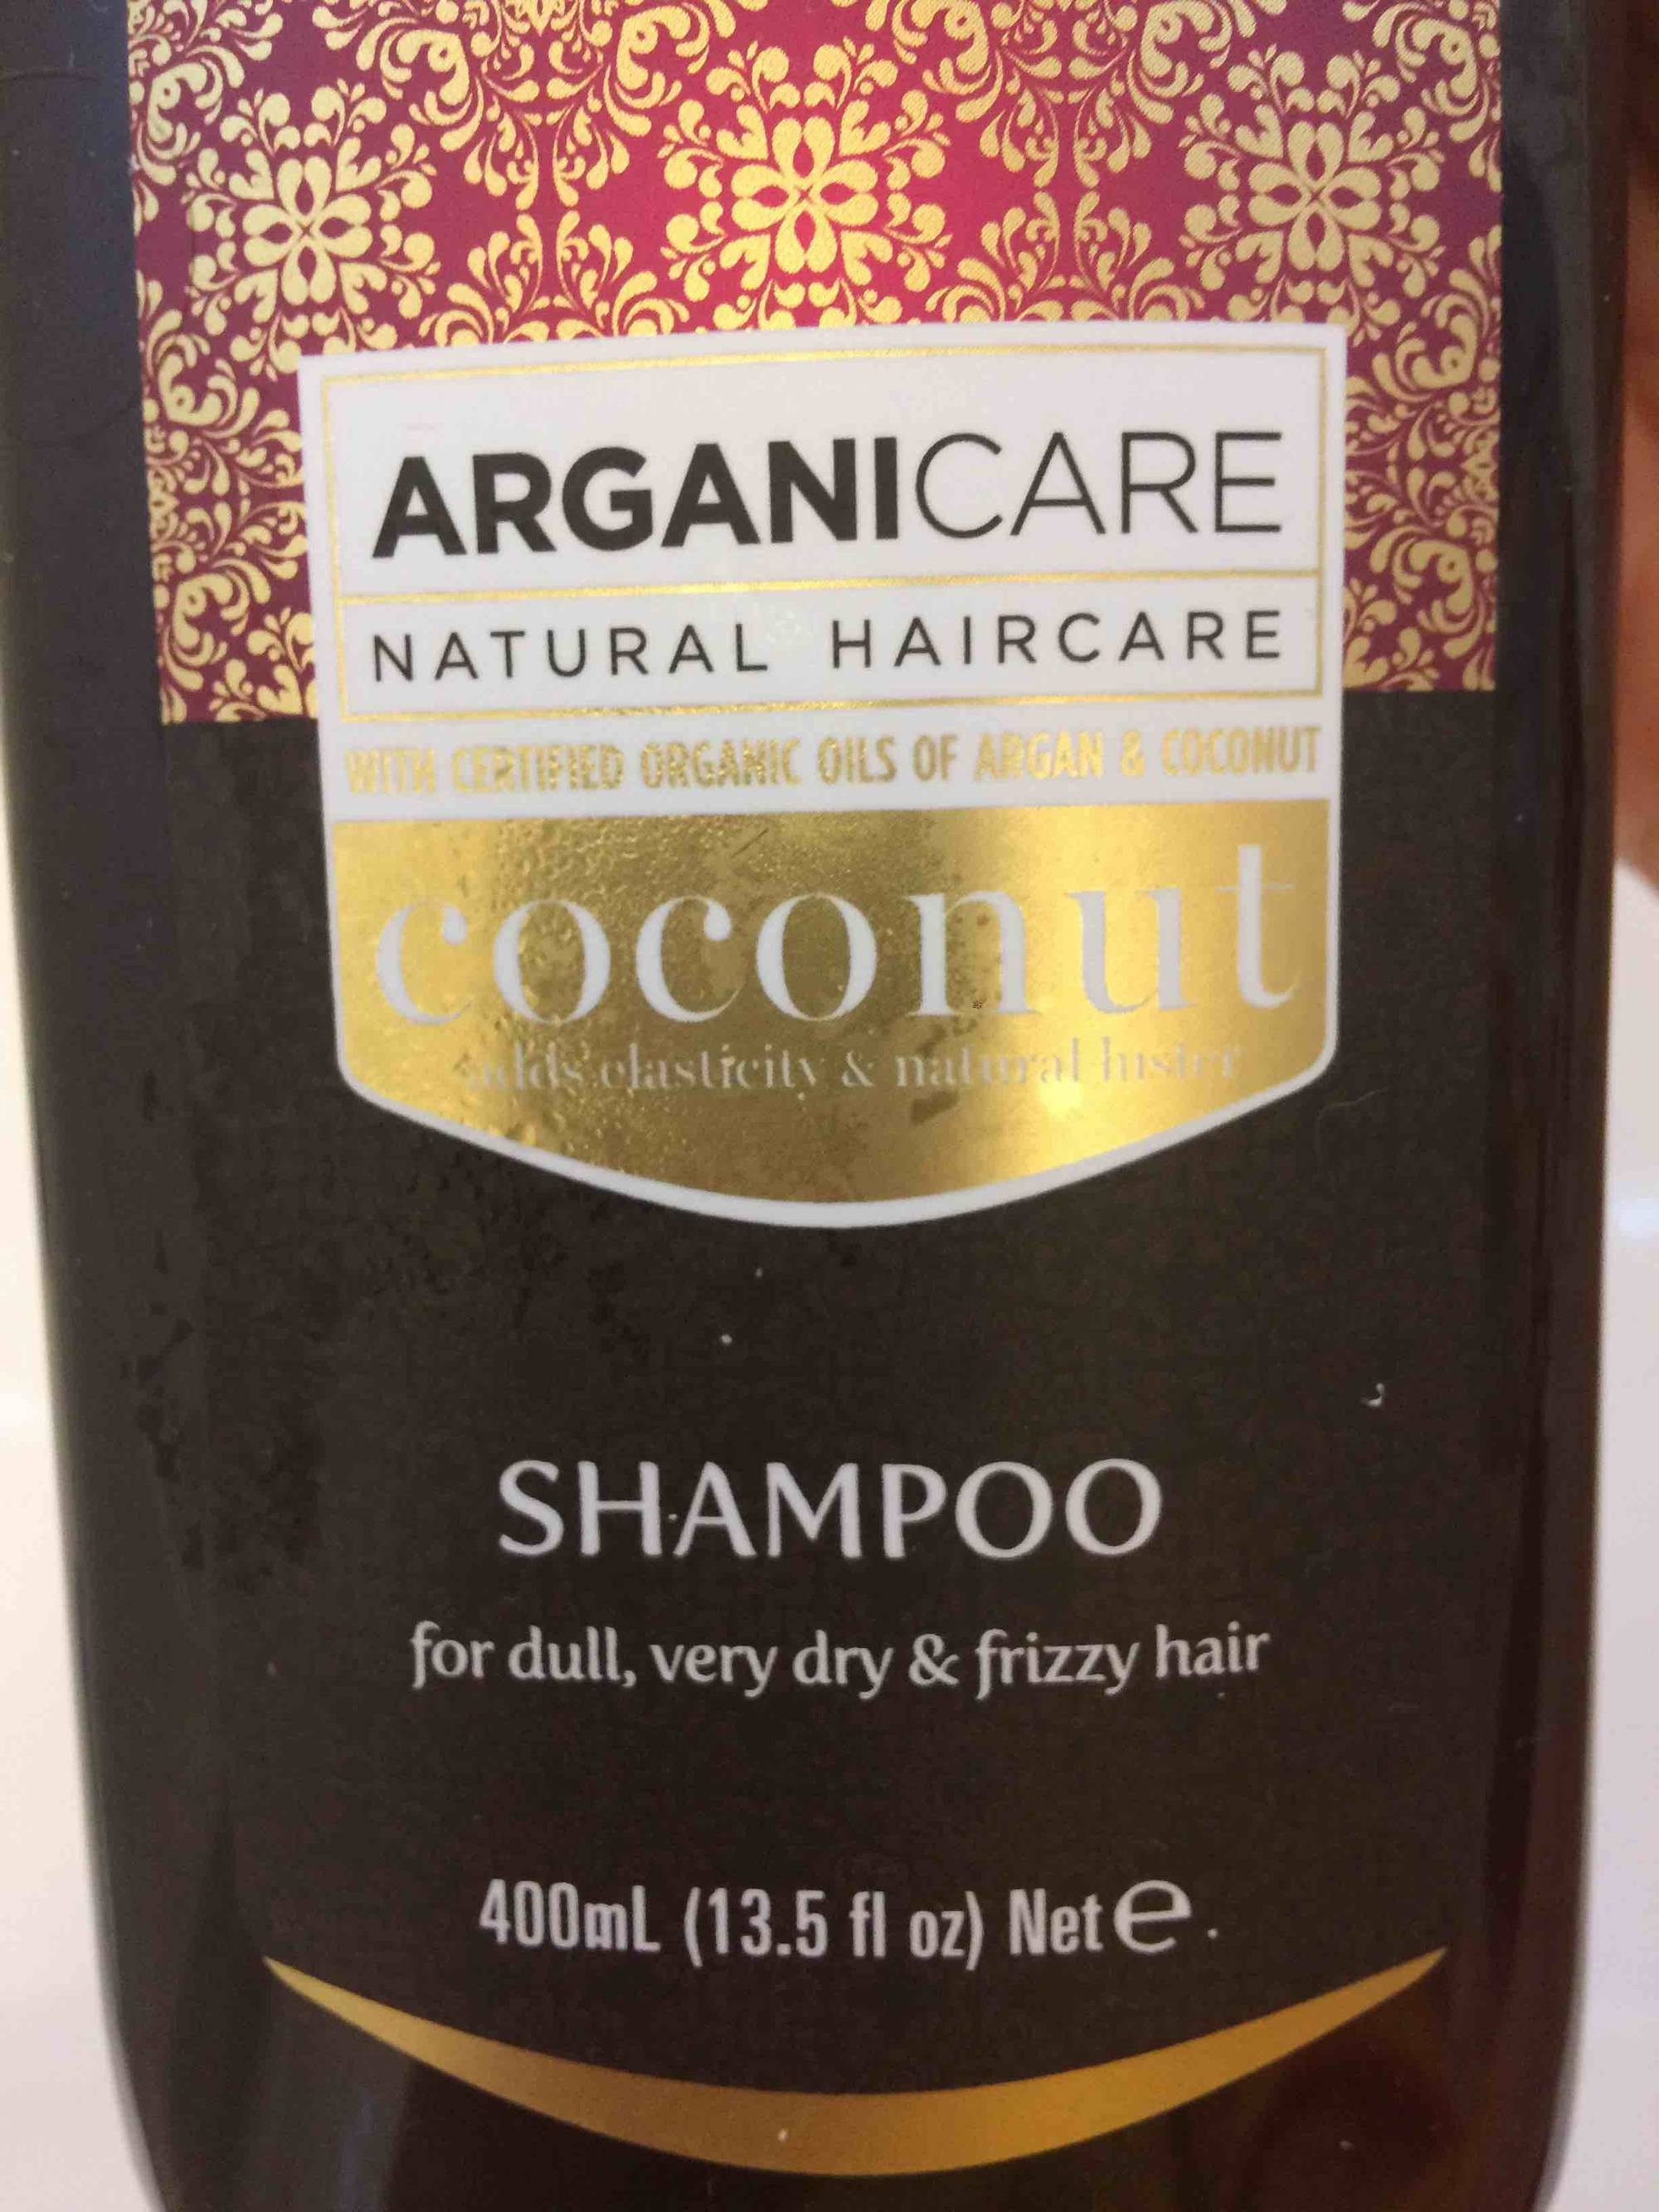 ARGANICARE - Natural haircare - Coconut shampoo